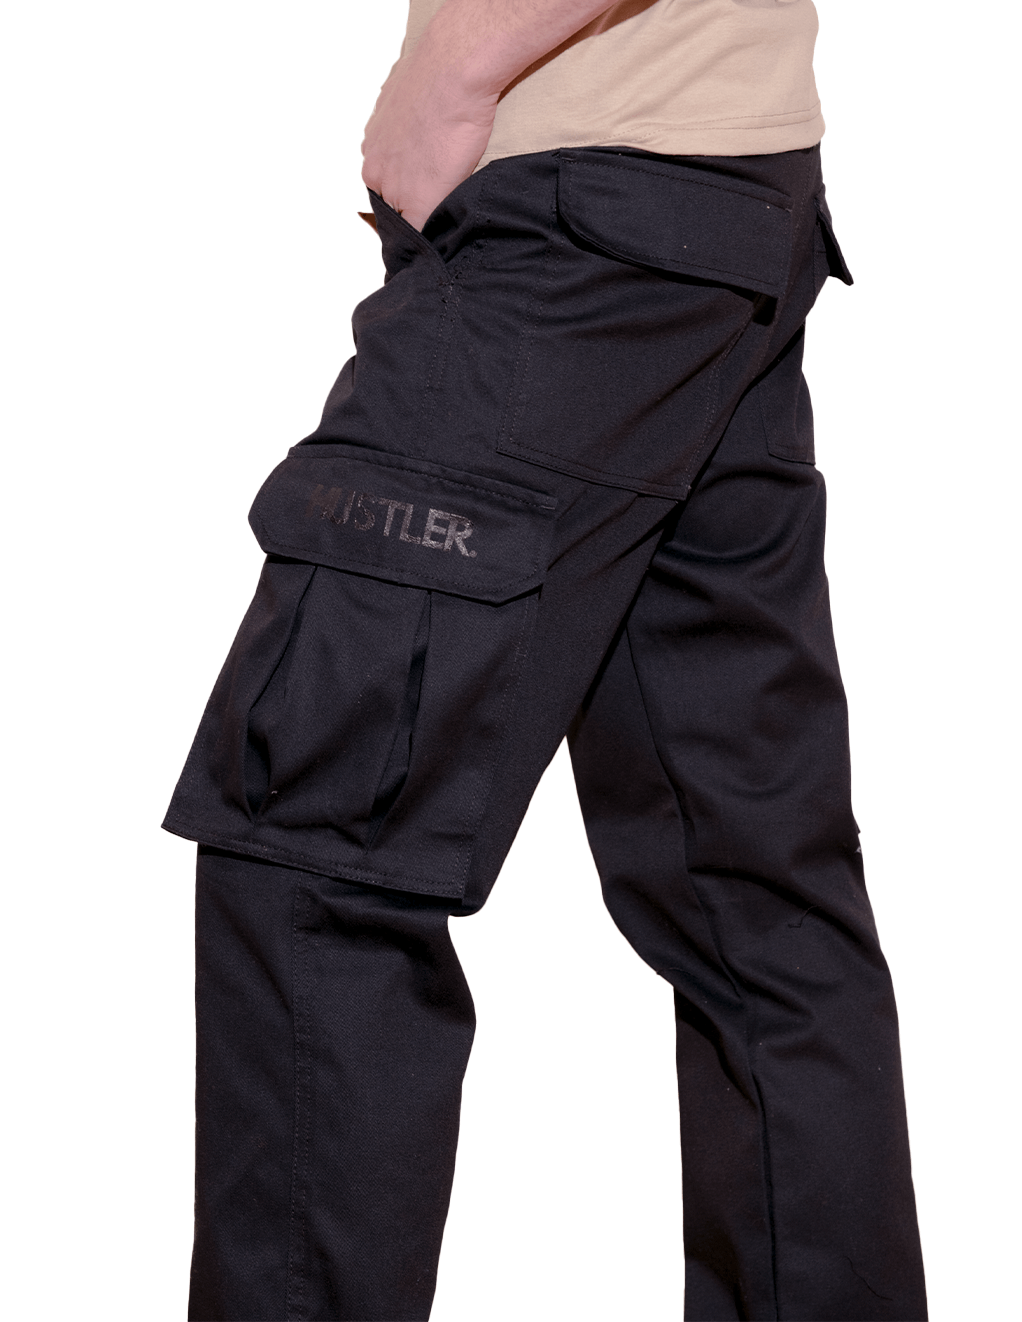 HUSTLER® Mens Cargo Pants - Black - Side